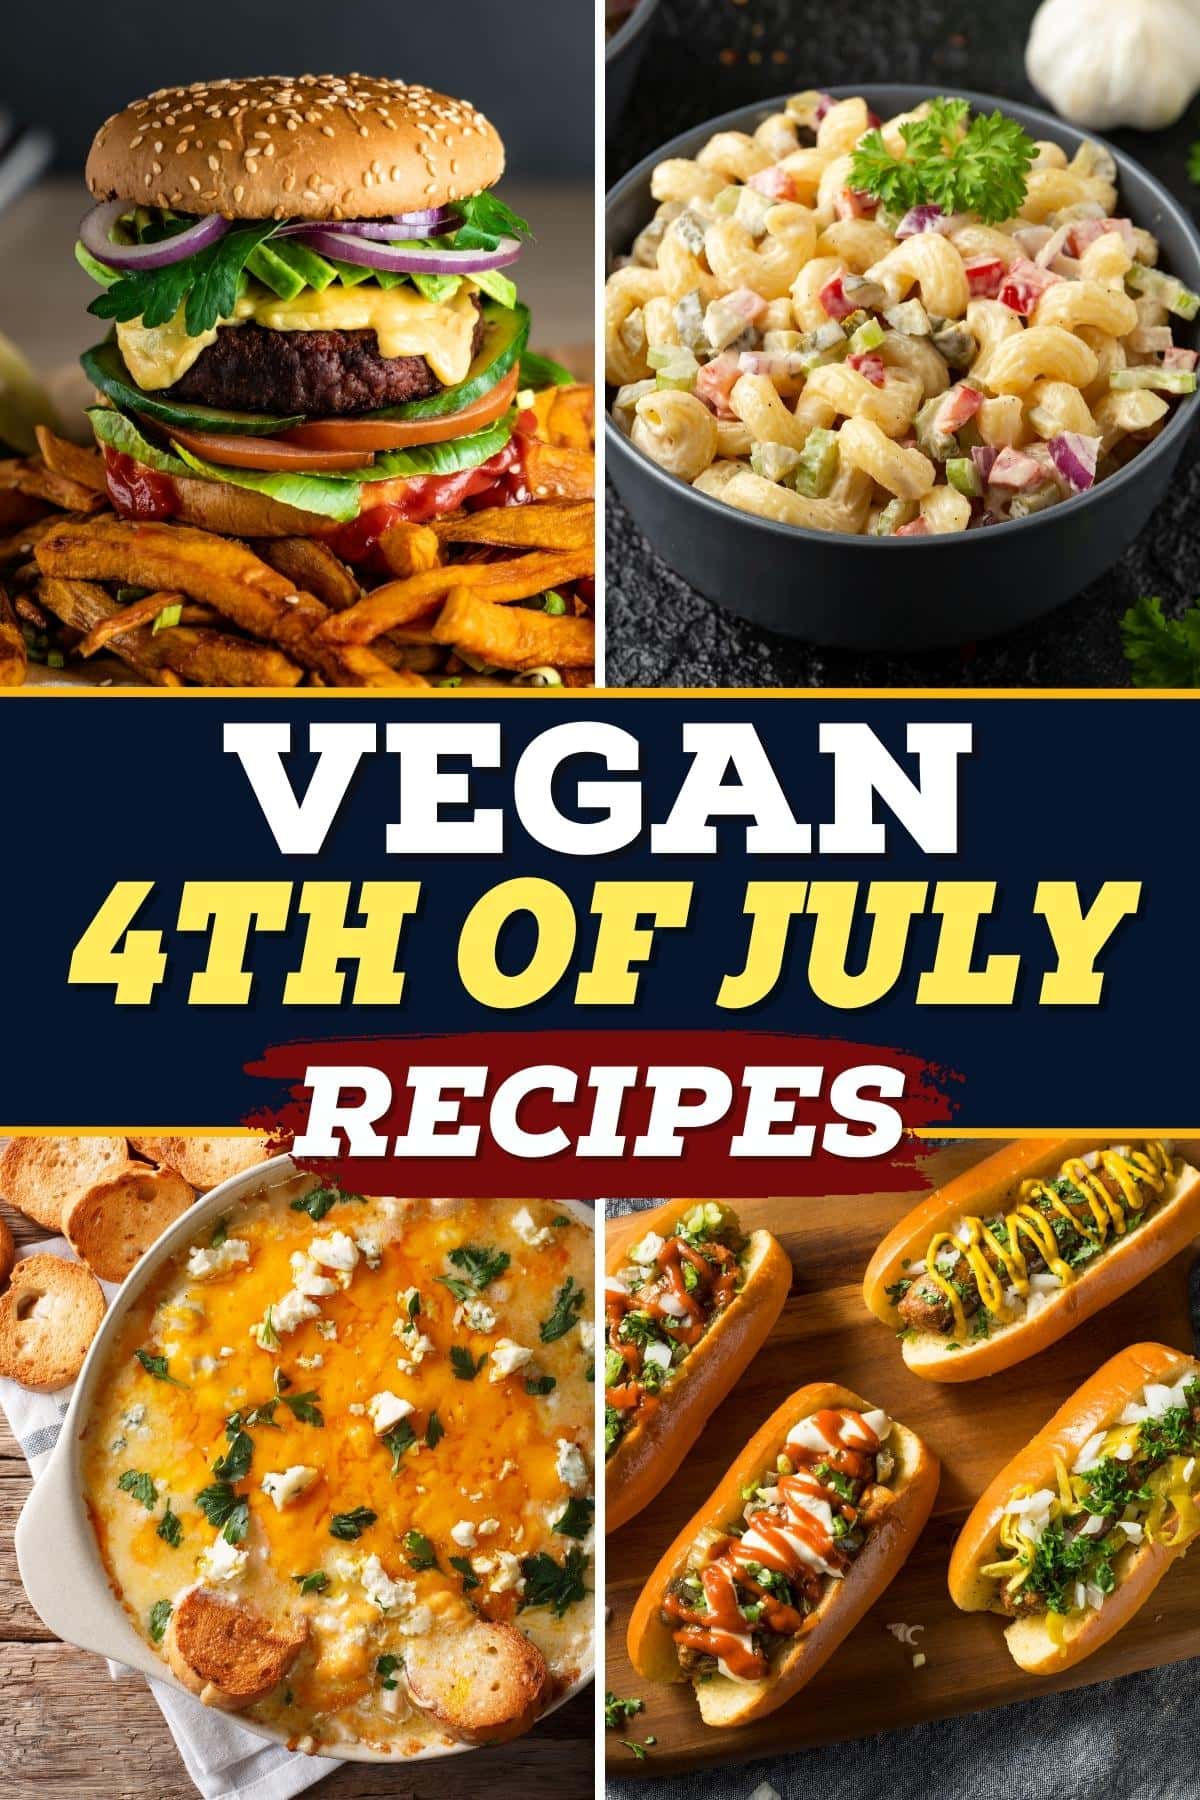 25 Easy Vegan 4th of July Recipes - Insanely Good